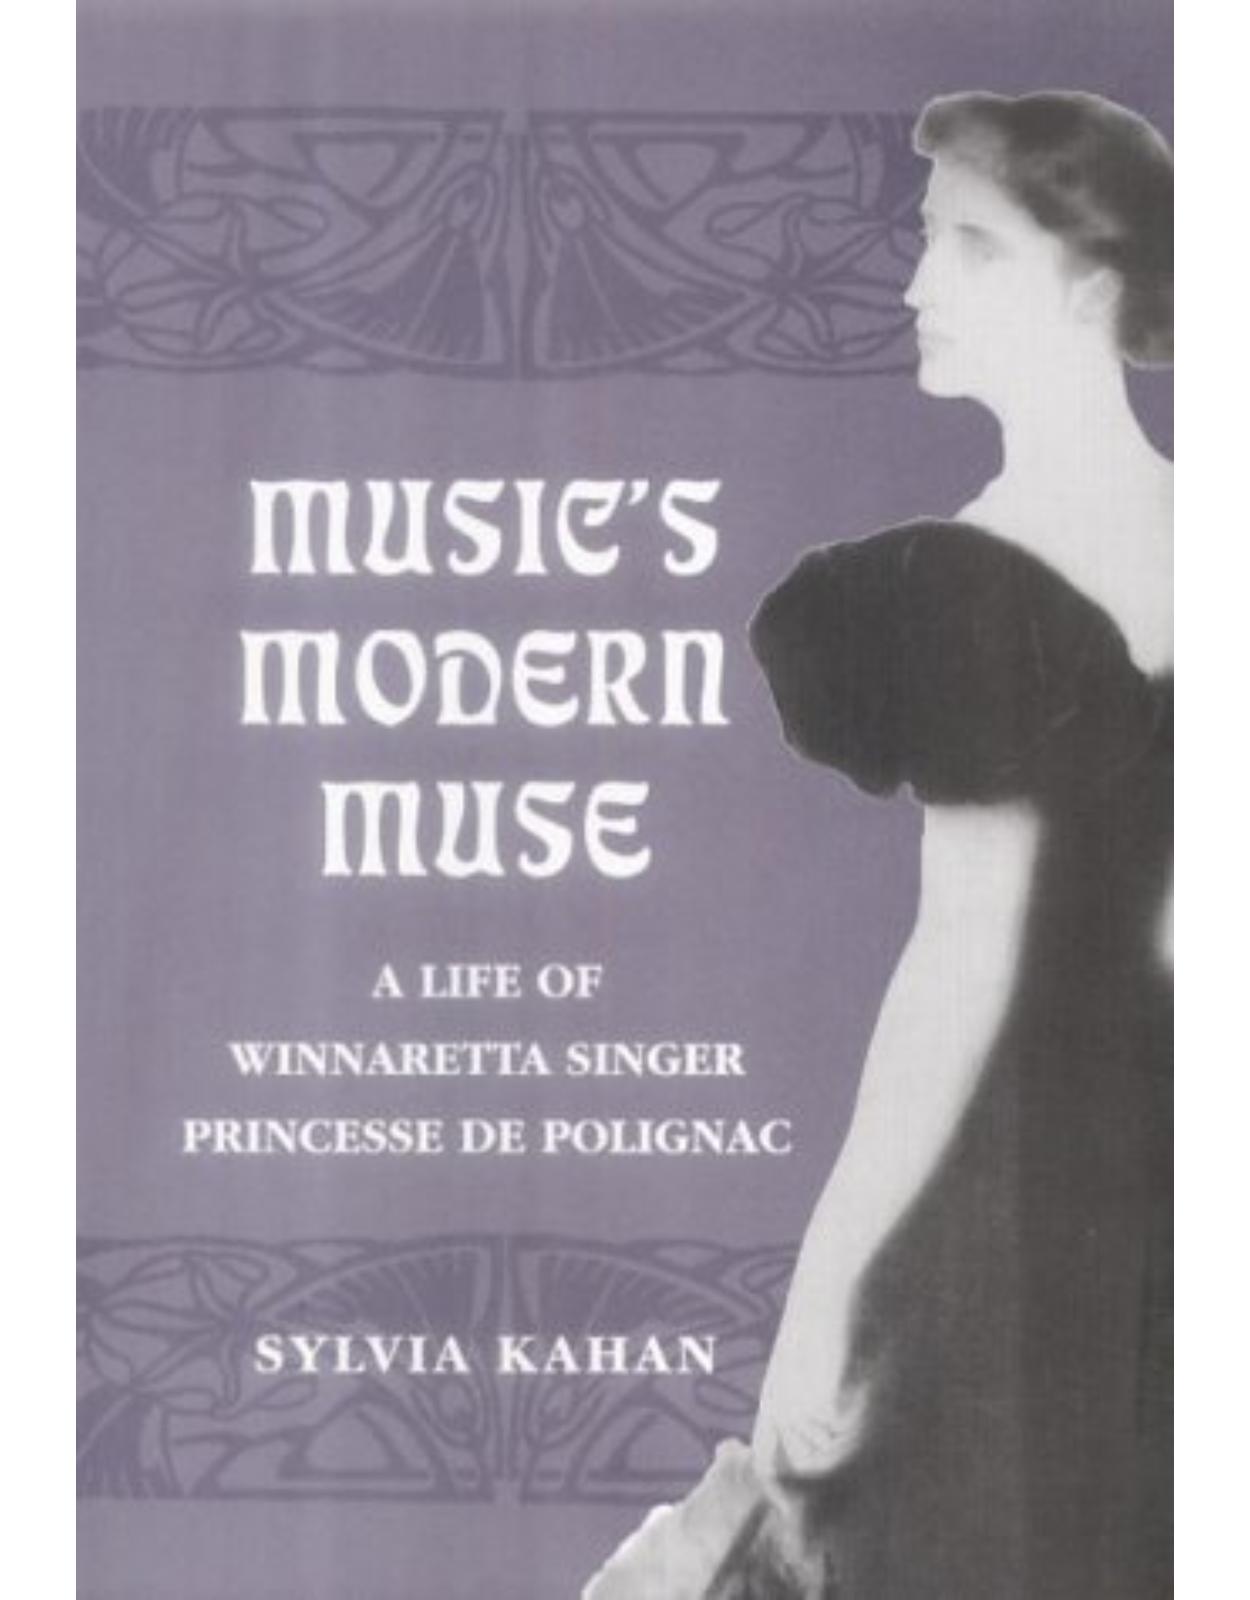 Music's Modern Muse: A Life of Winnaretta Singer, Princesse De Polignac